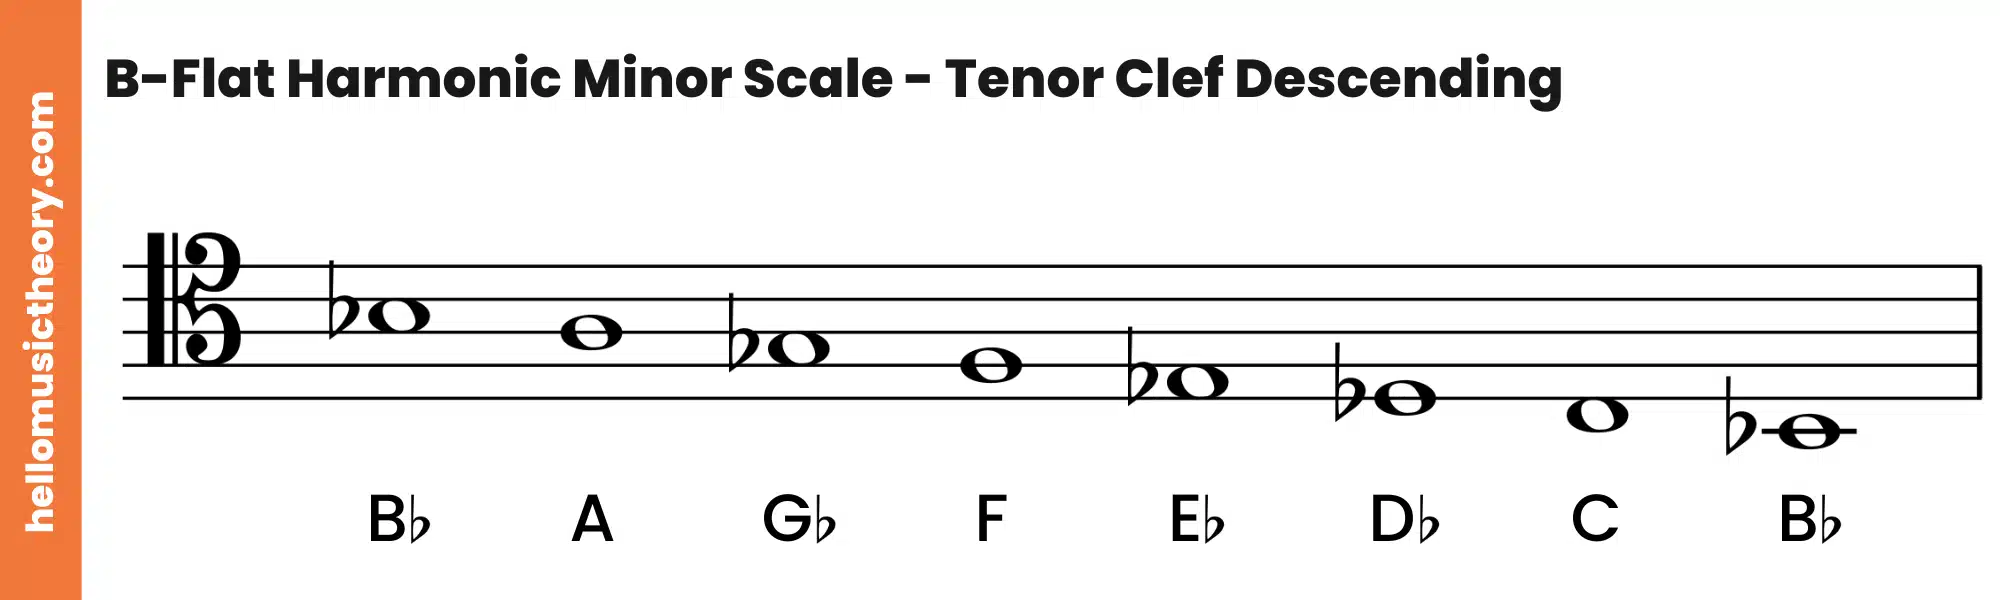 B-Flat Harmonic Minor Scale Tenor Clef Descending